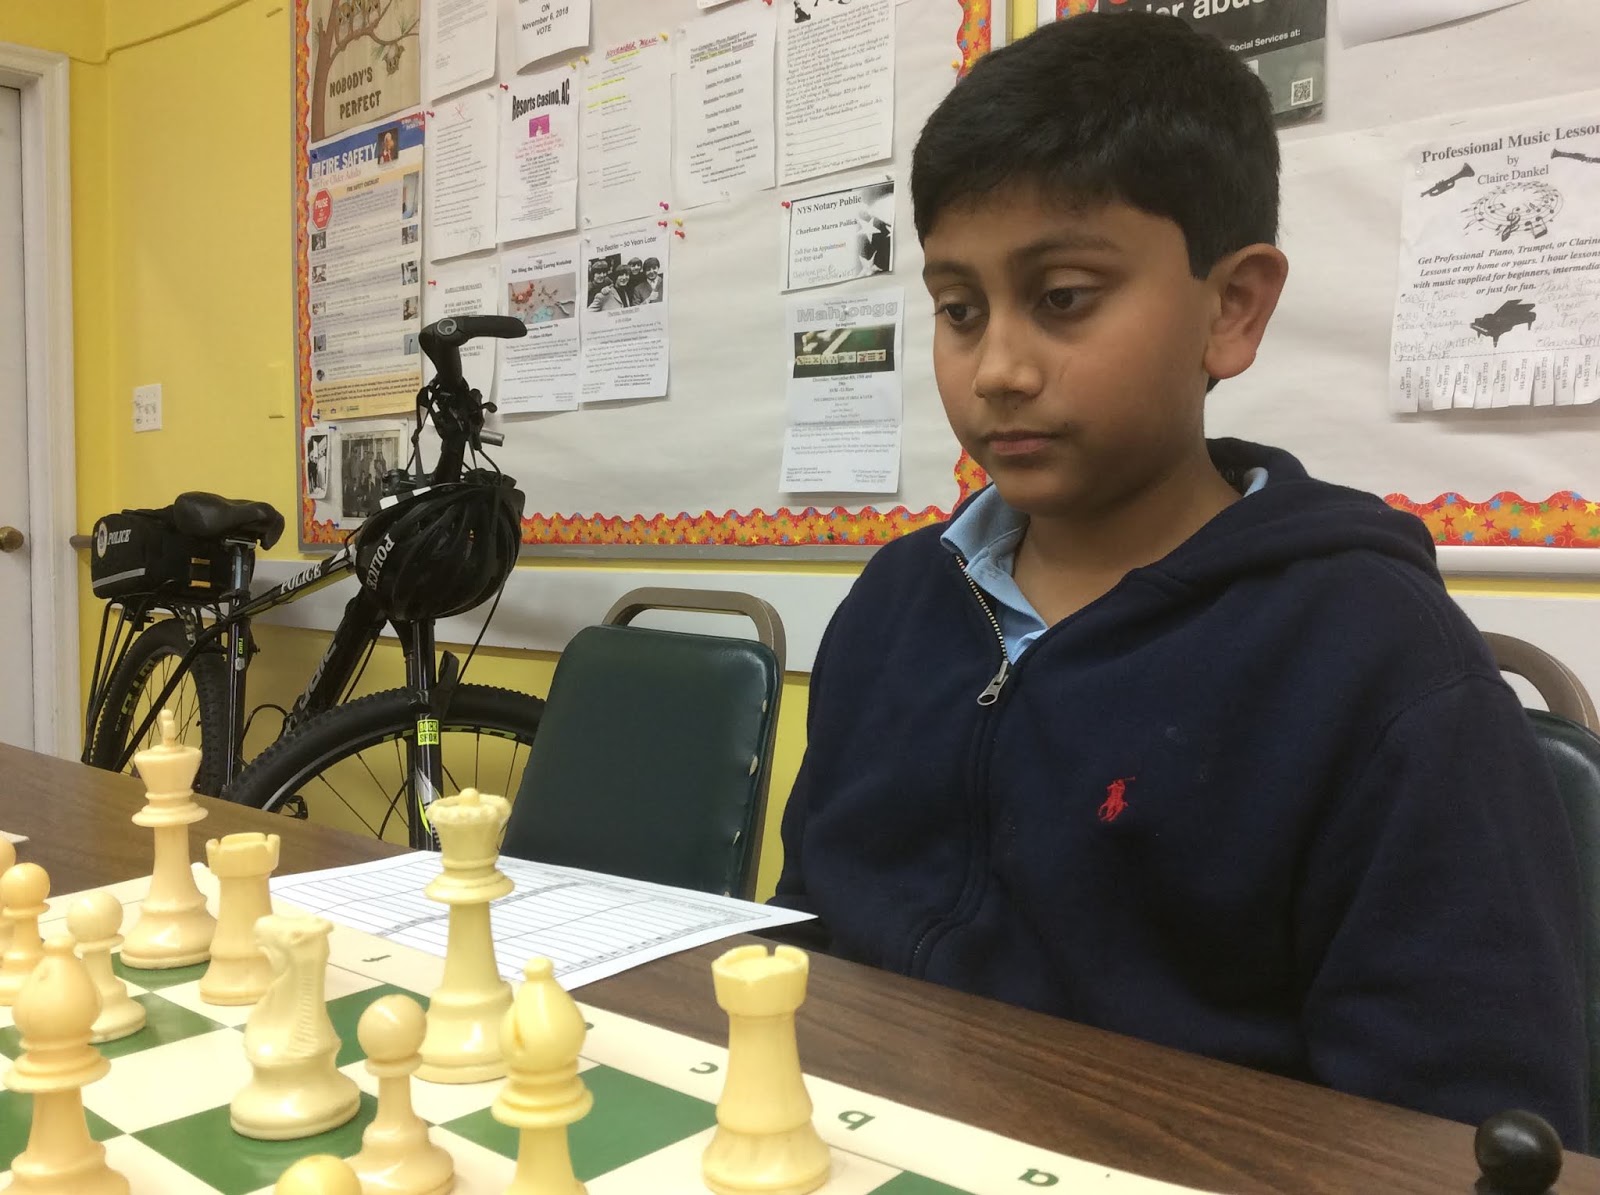 Westchester Chess Academy